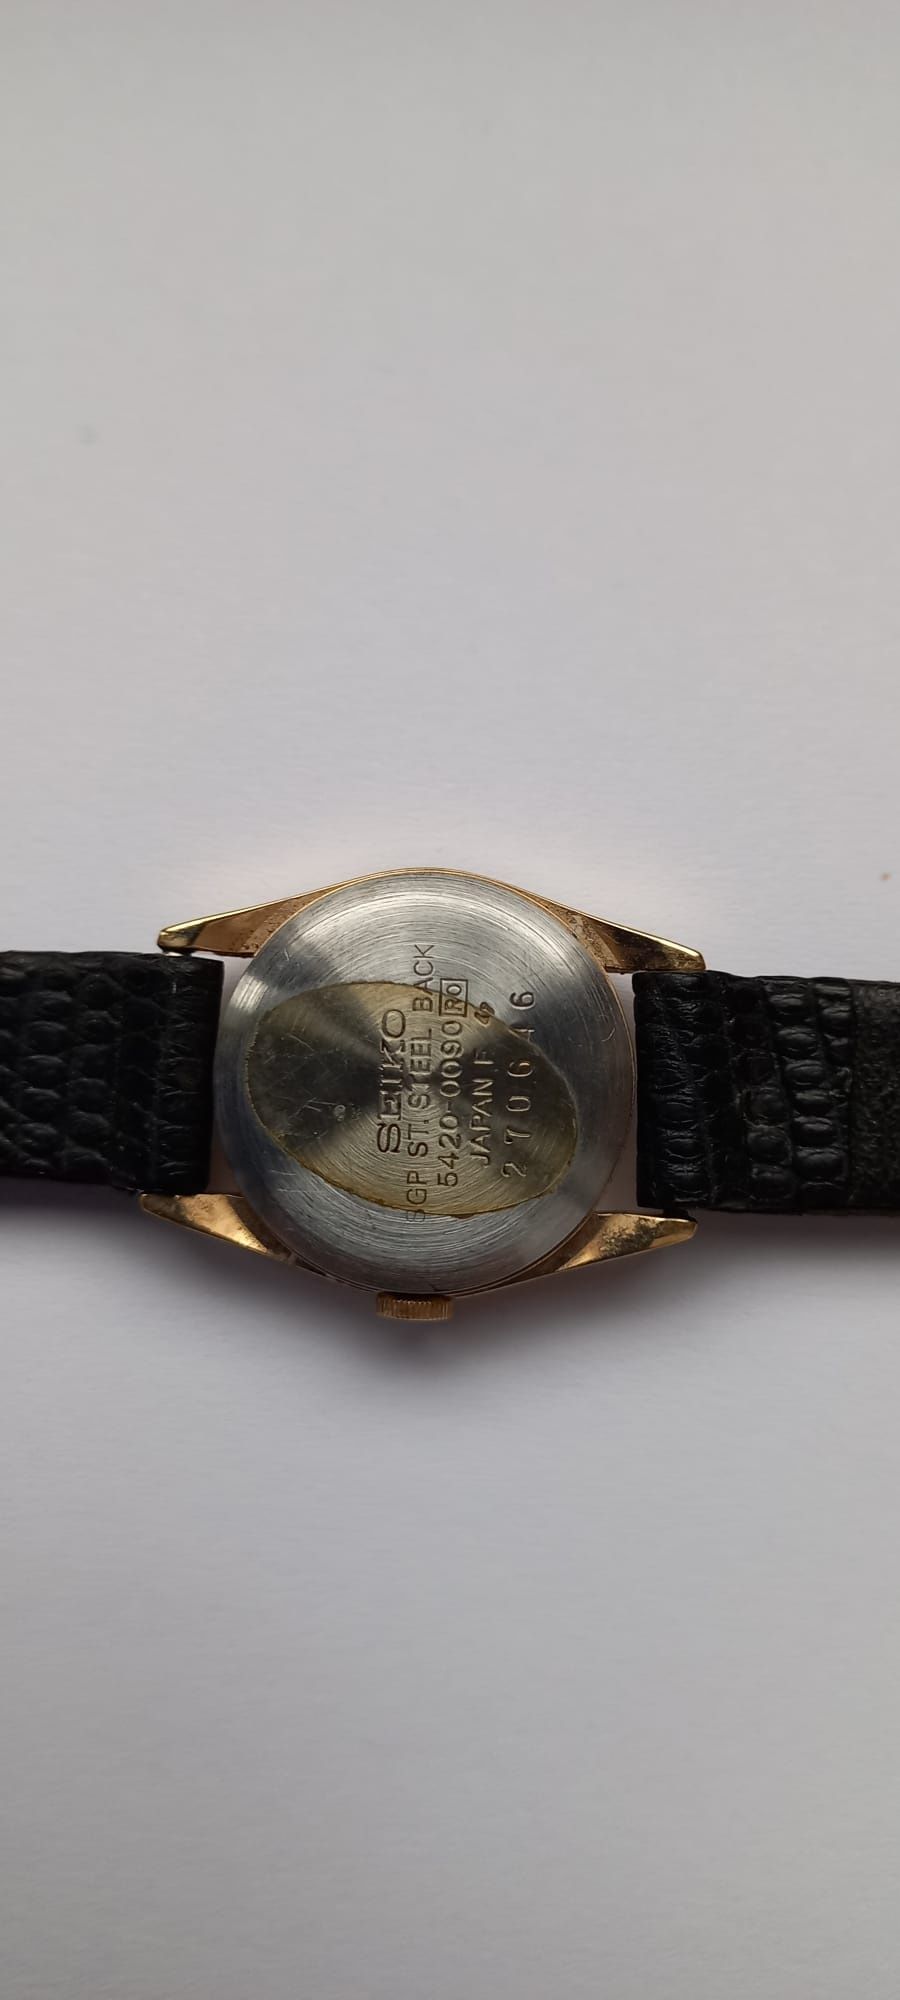 Ceas de dama Seiko quartz placat cu aur vintage 5420-0090